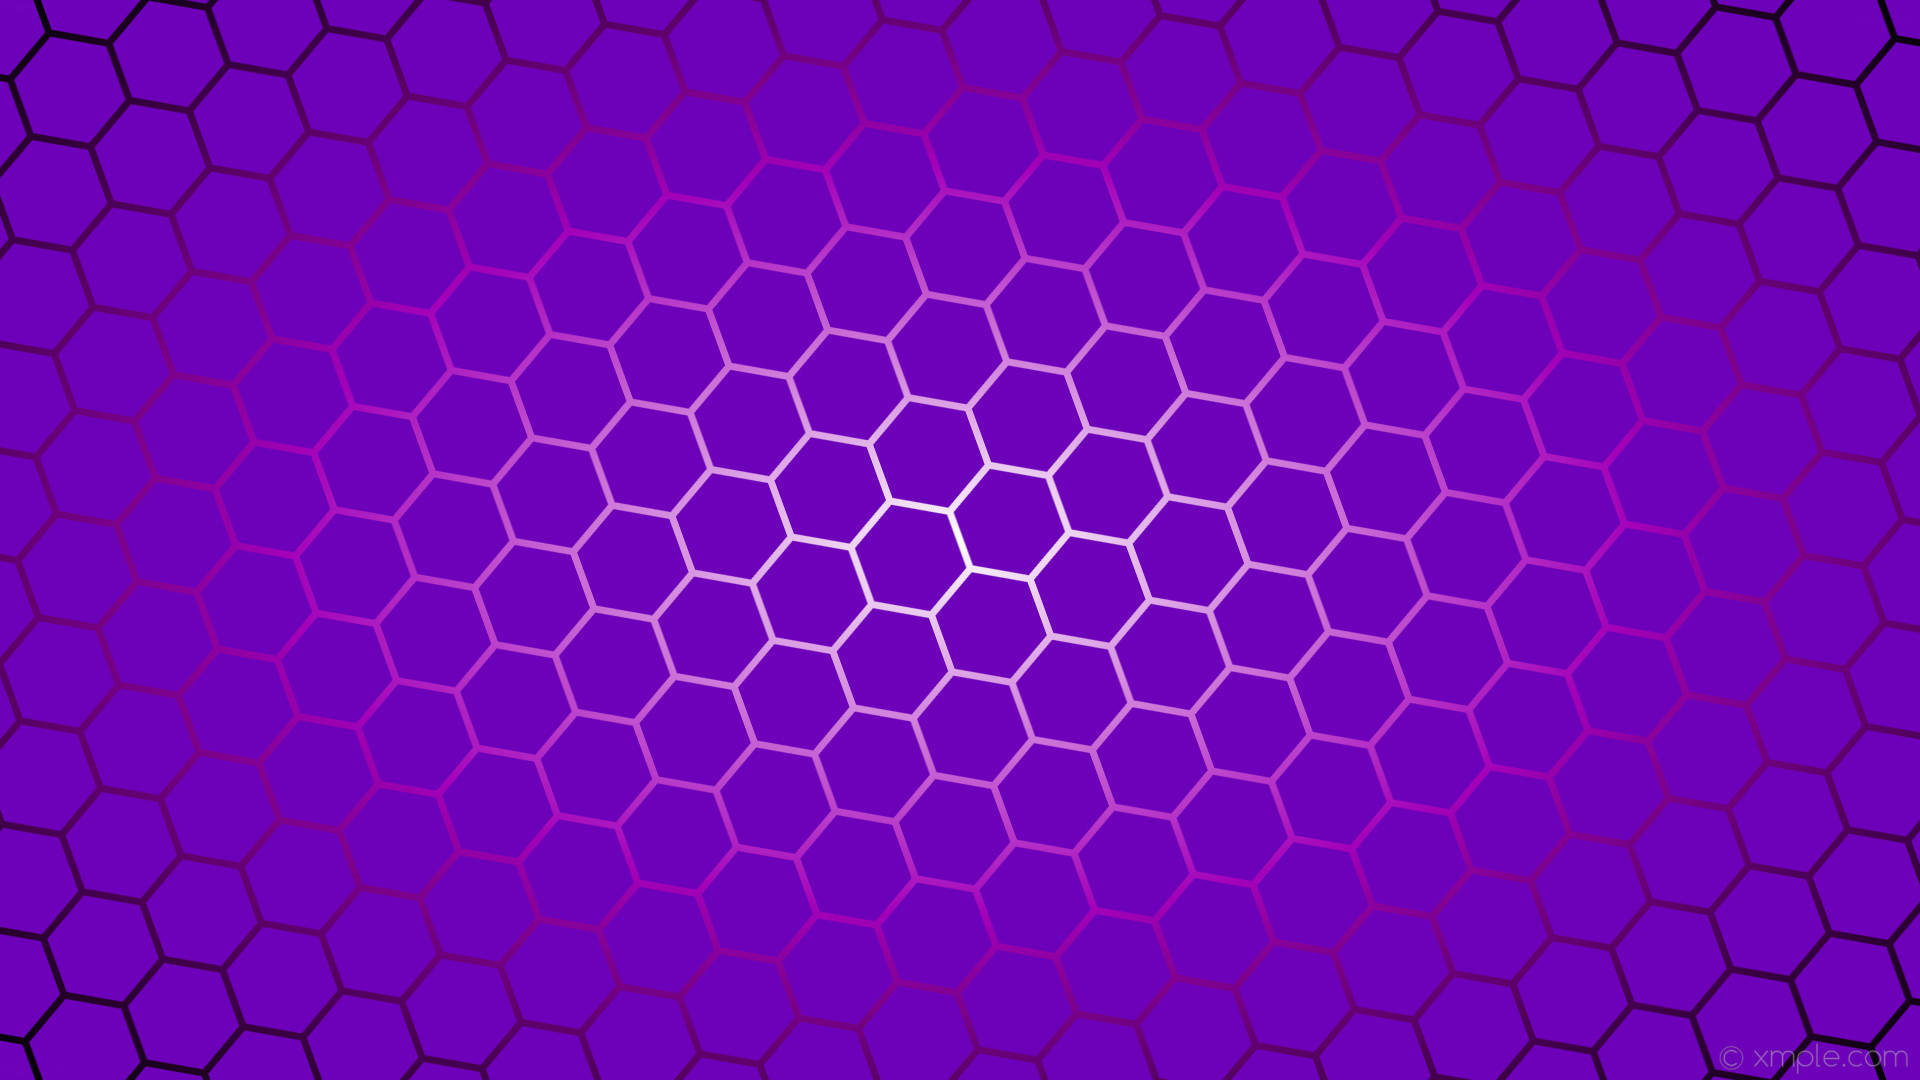 1920x1080 wallpaper violet white black hexagon magenta gradient glow #6d01b9 #ffffff  #a401b9 diagonal 20